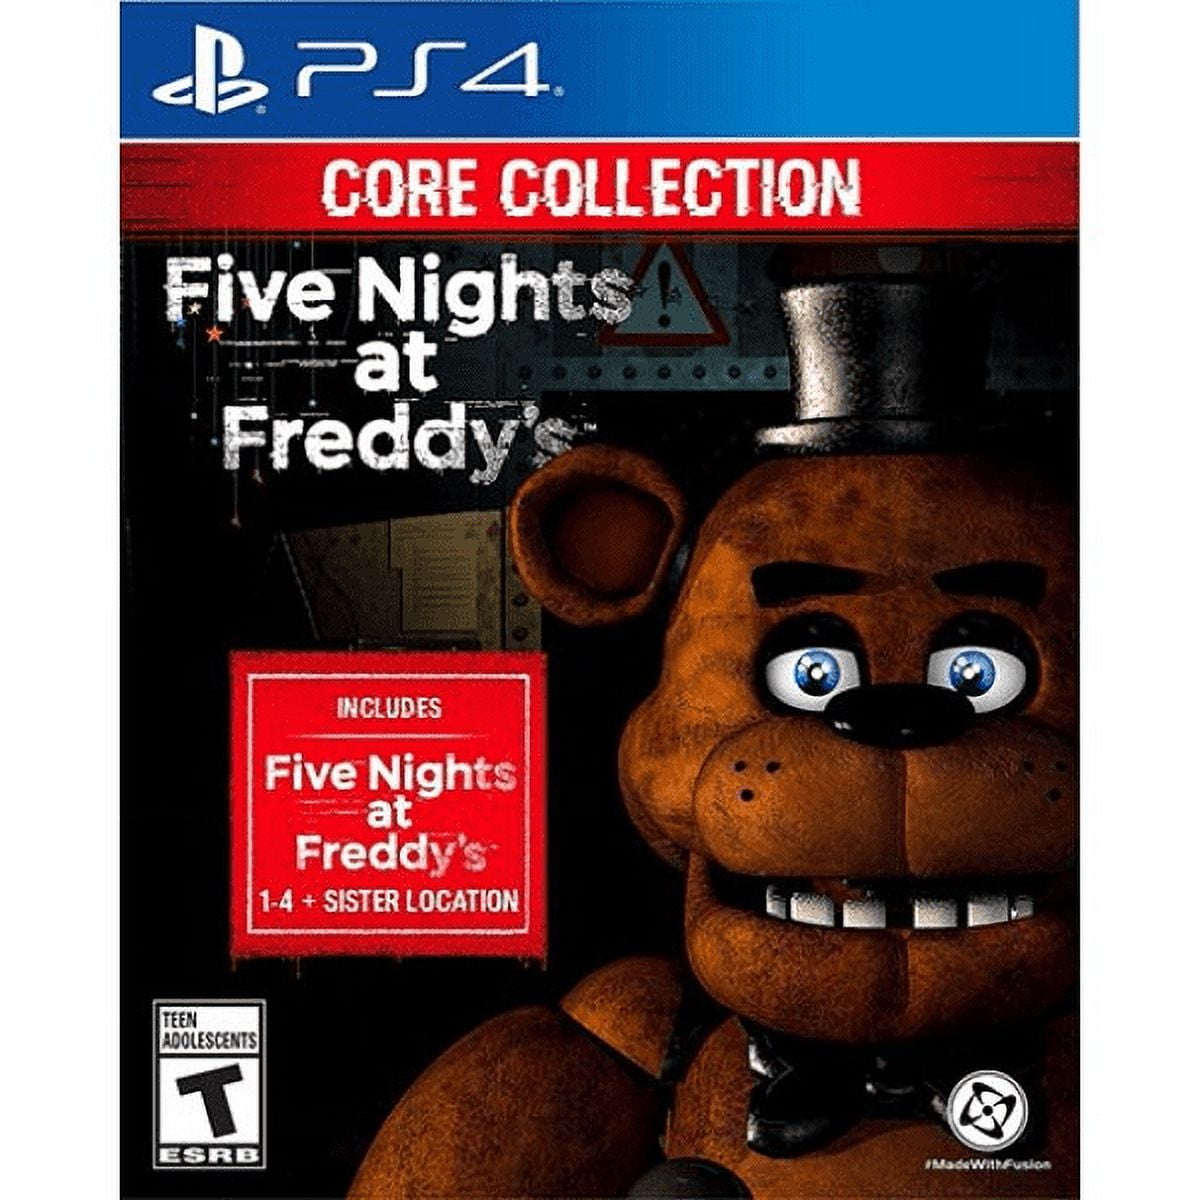 FNAF 4 Unblocked - Five Nights at Freddy's 4